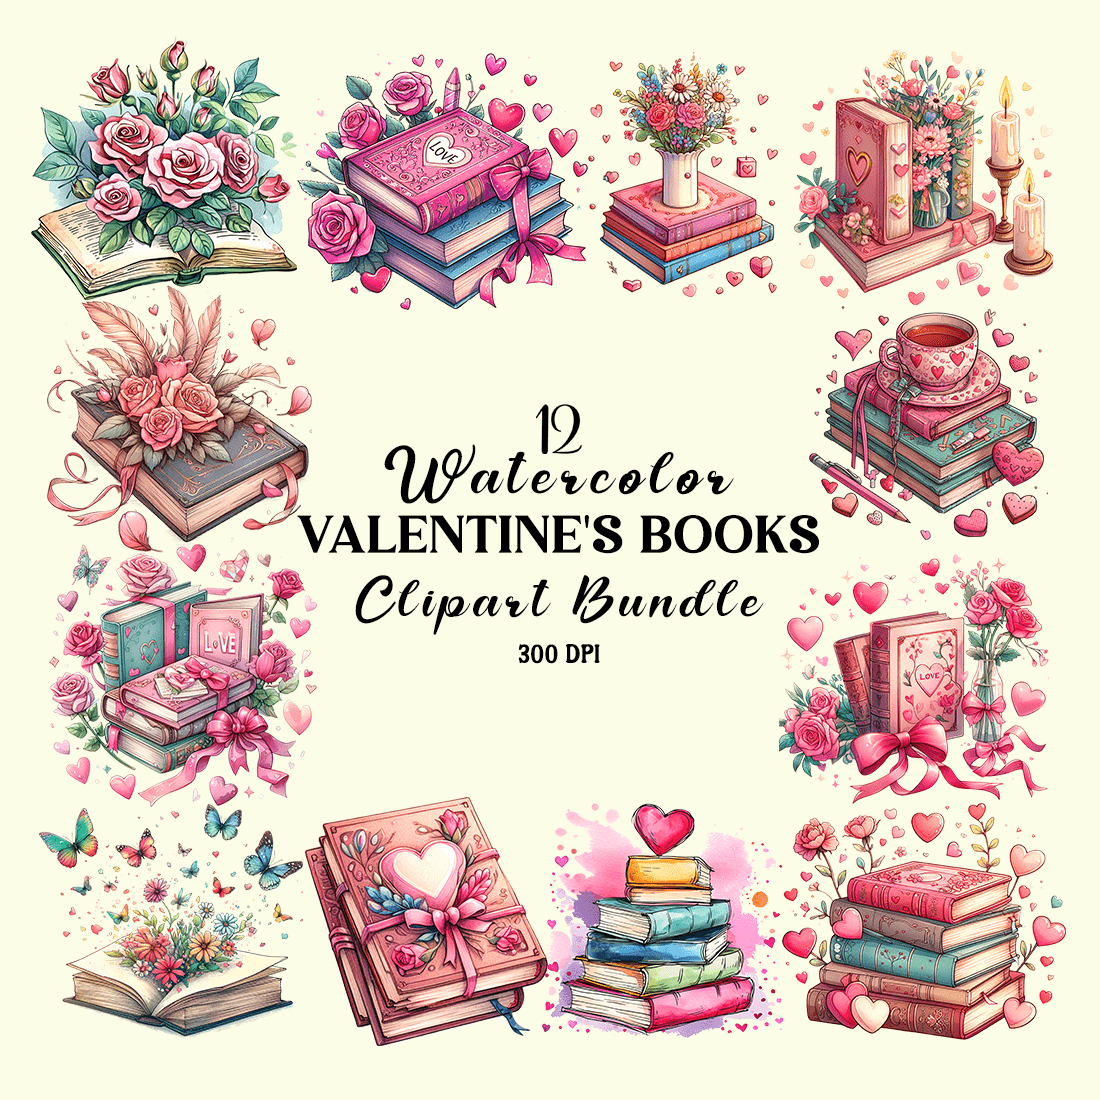 Watercolor Valentine's Books Clipart Bundle cover image.